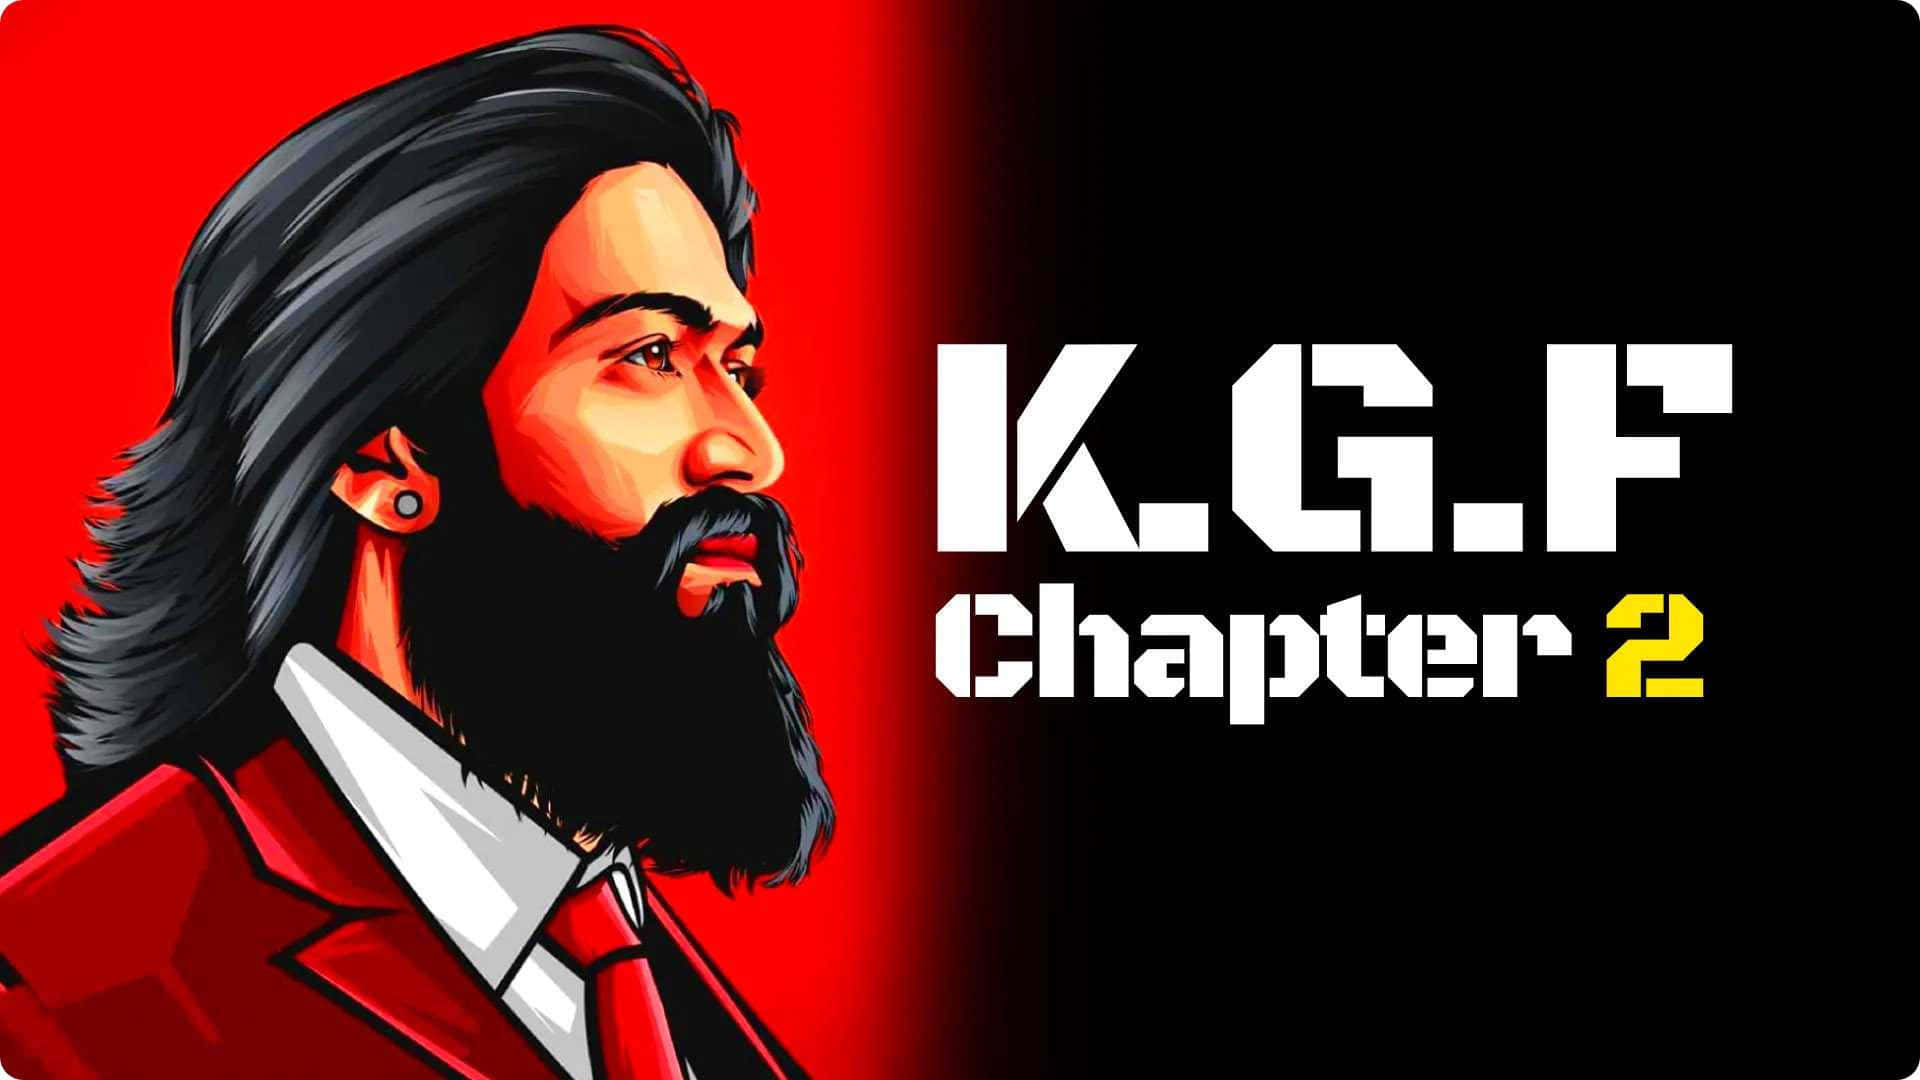 Kgf Chapter 2 Apk